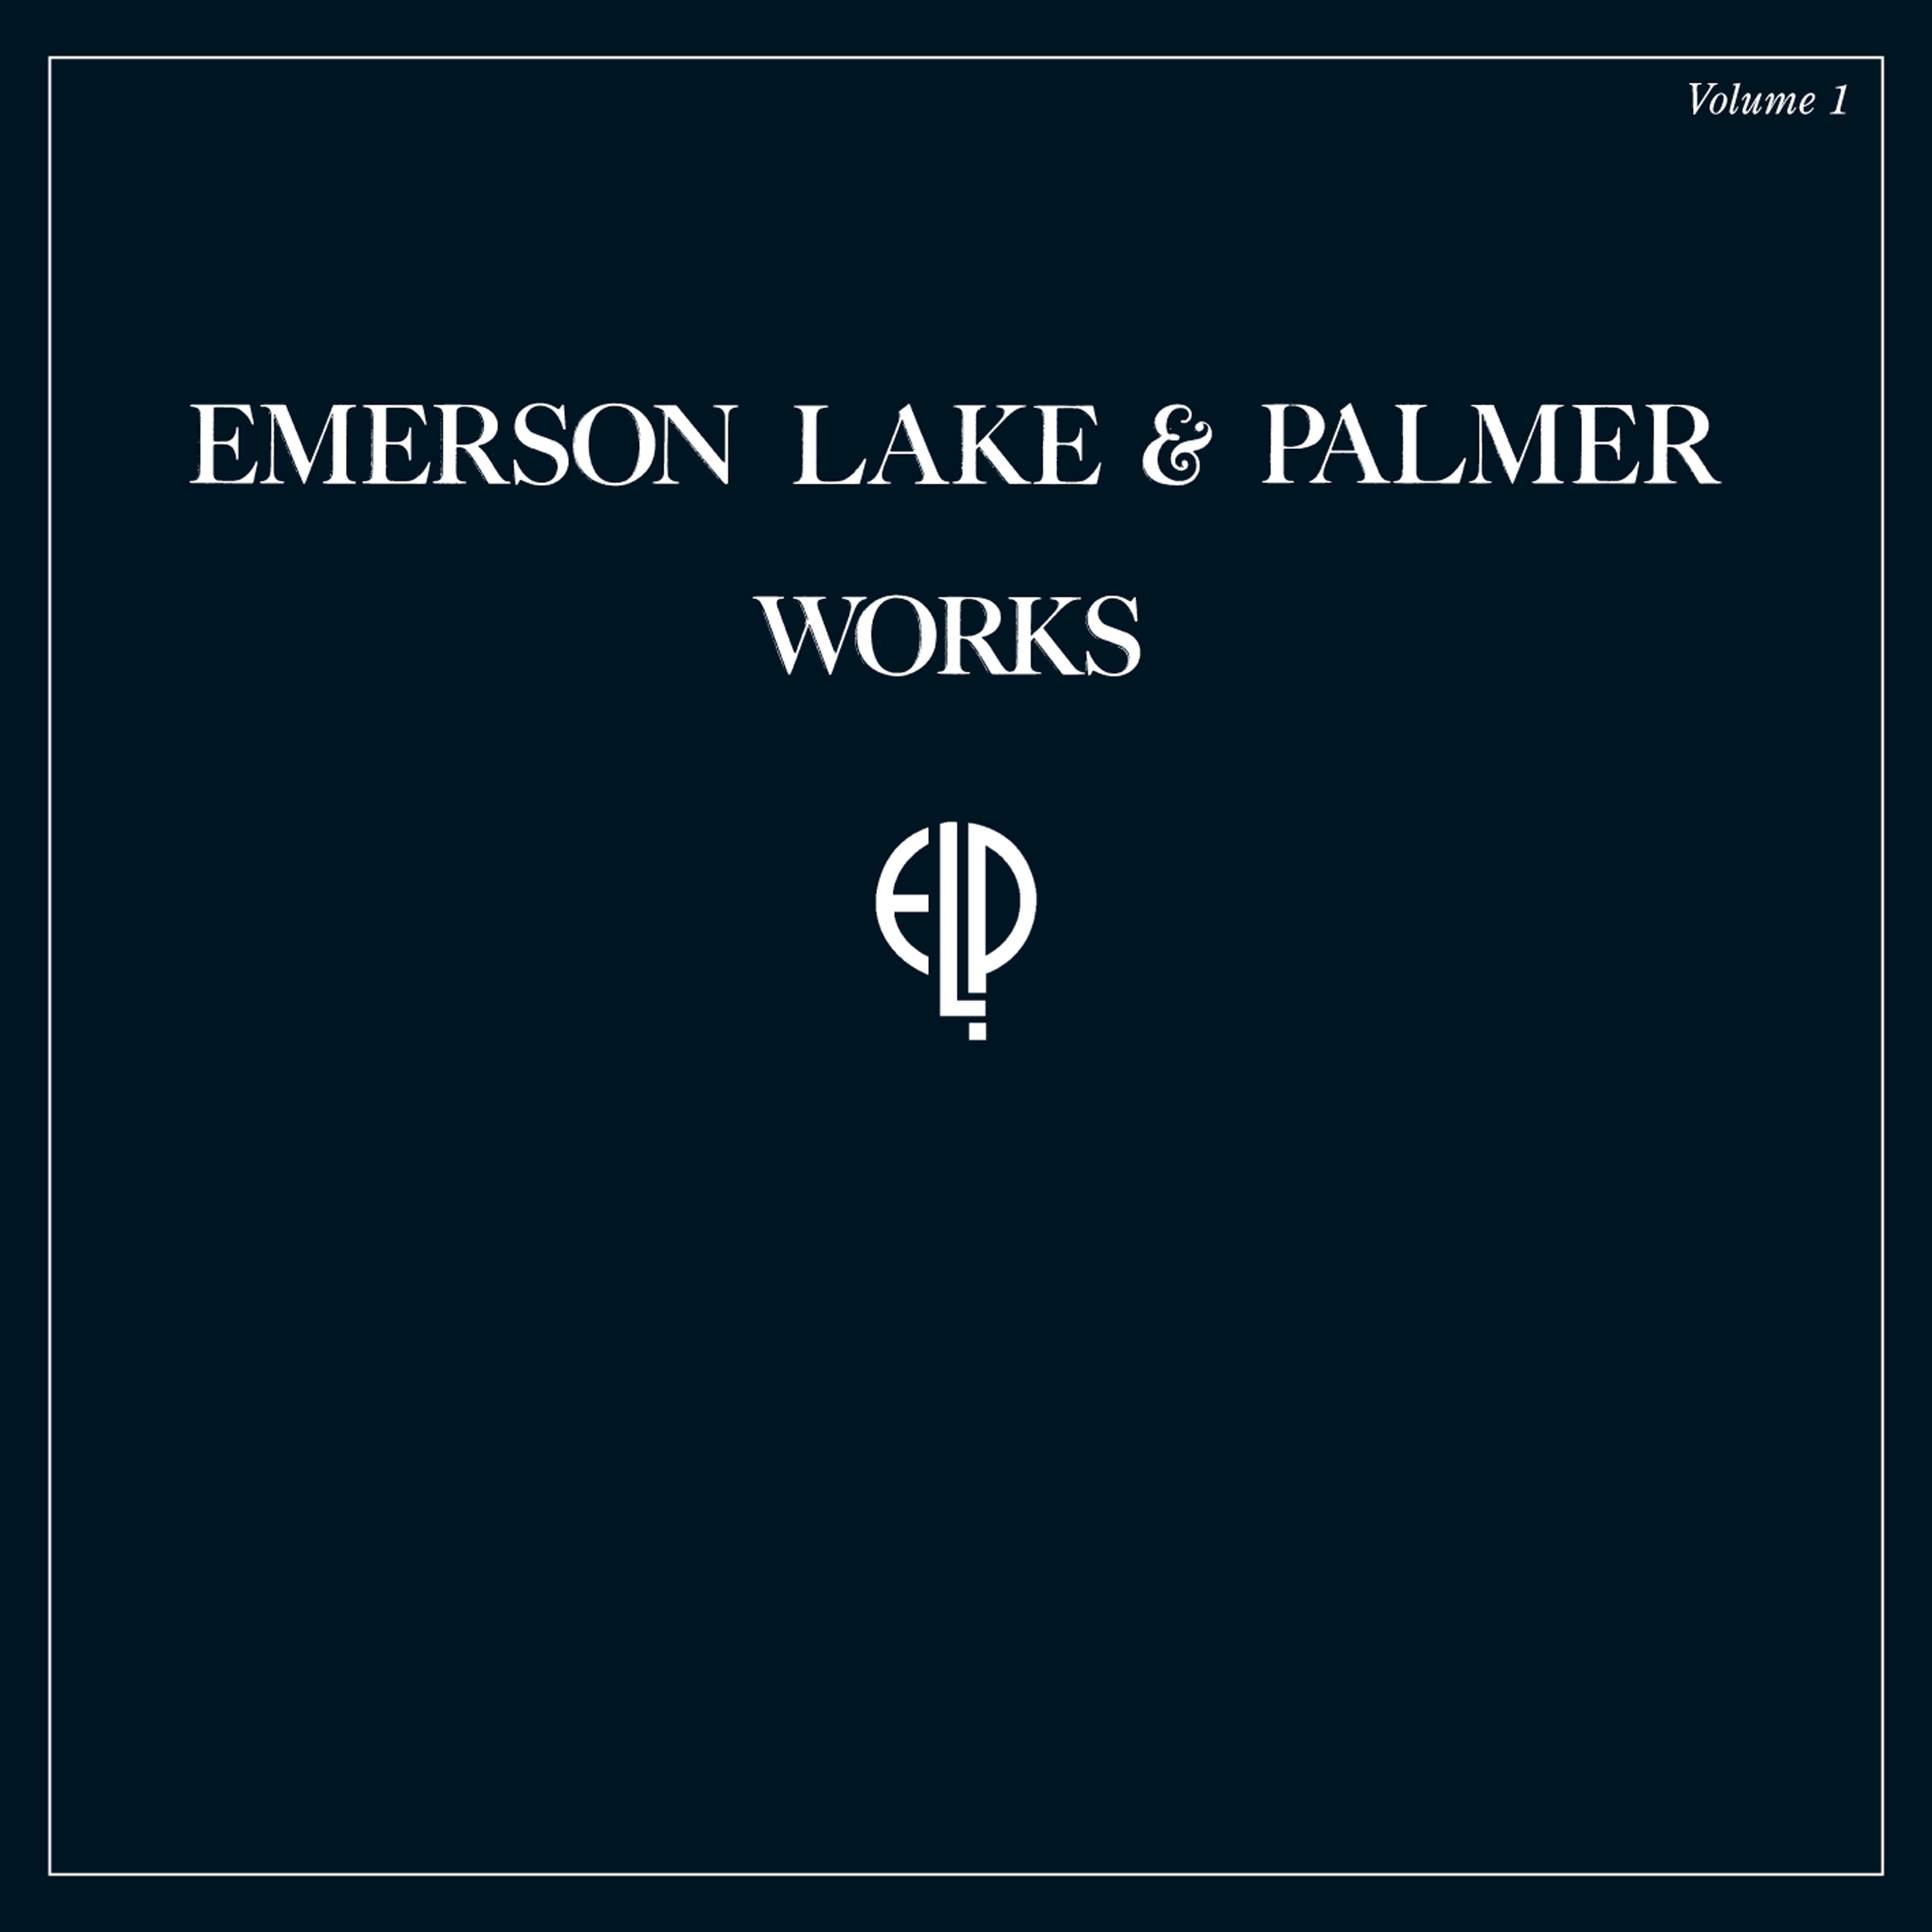 Emerson, Lake & Palmer – Works, Volume 1 (1977/2017) [HDTracks FLAC 24bit/96kHz]